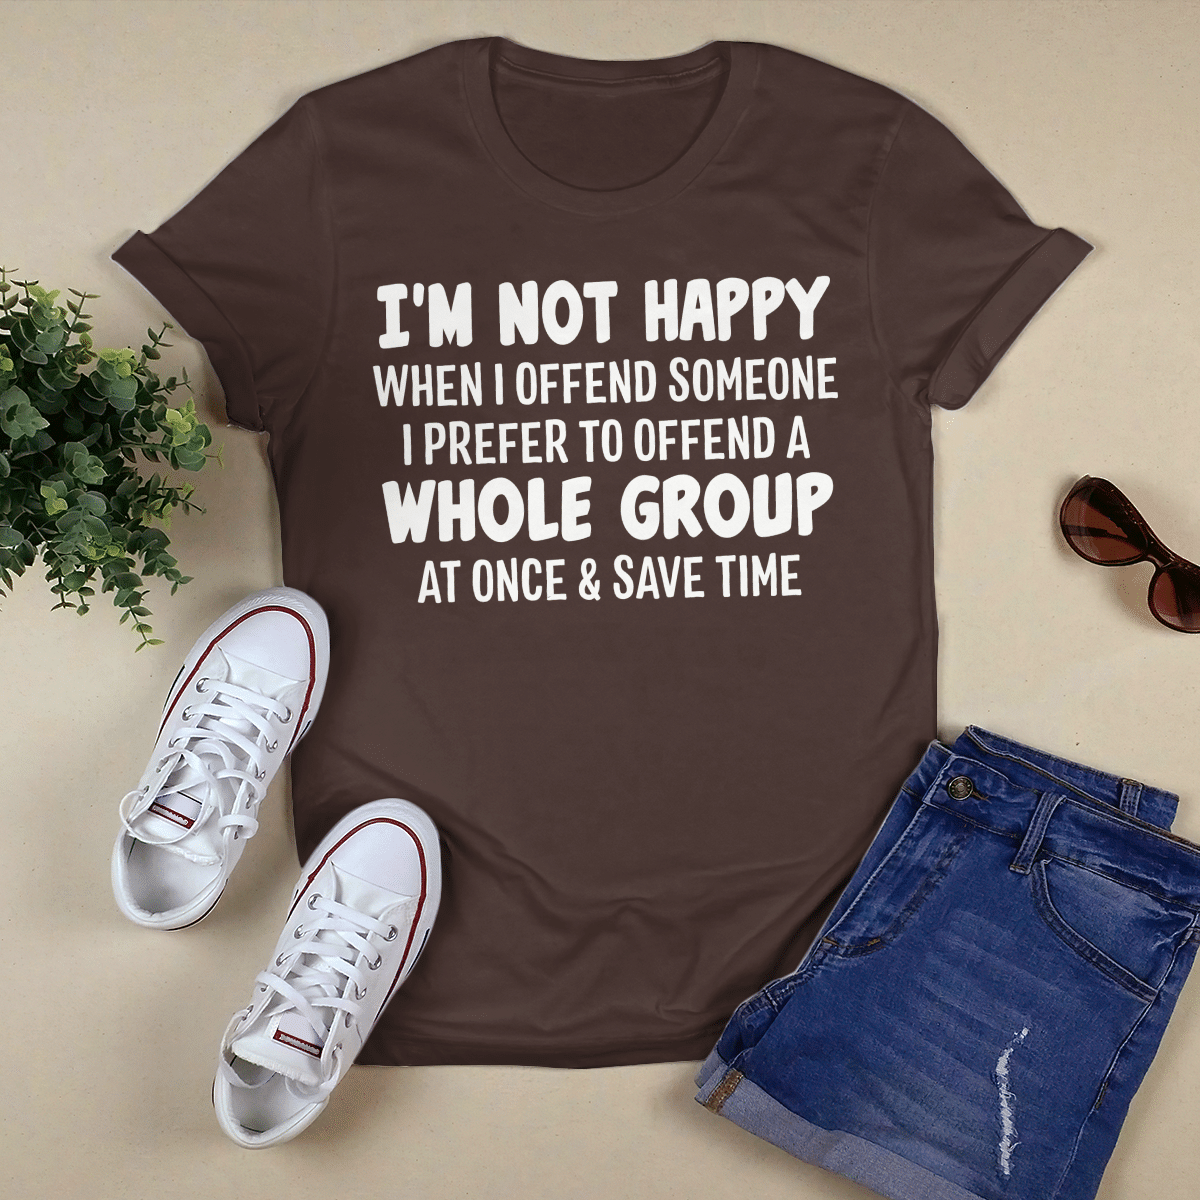 I_m Not Happy shirt